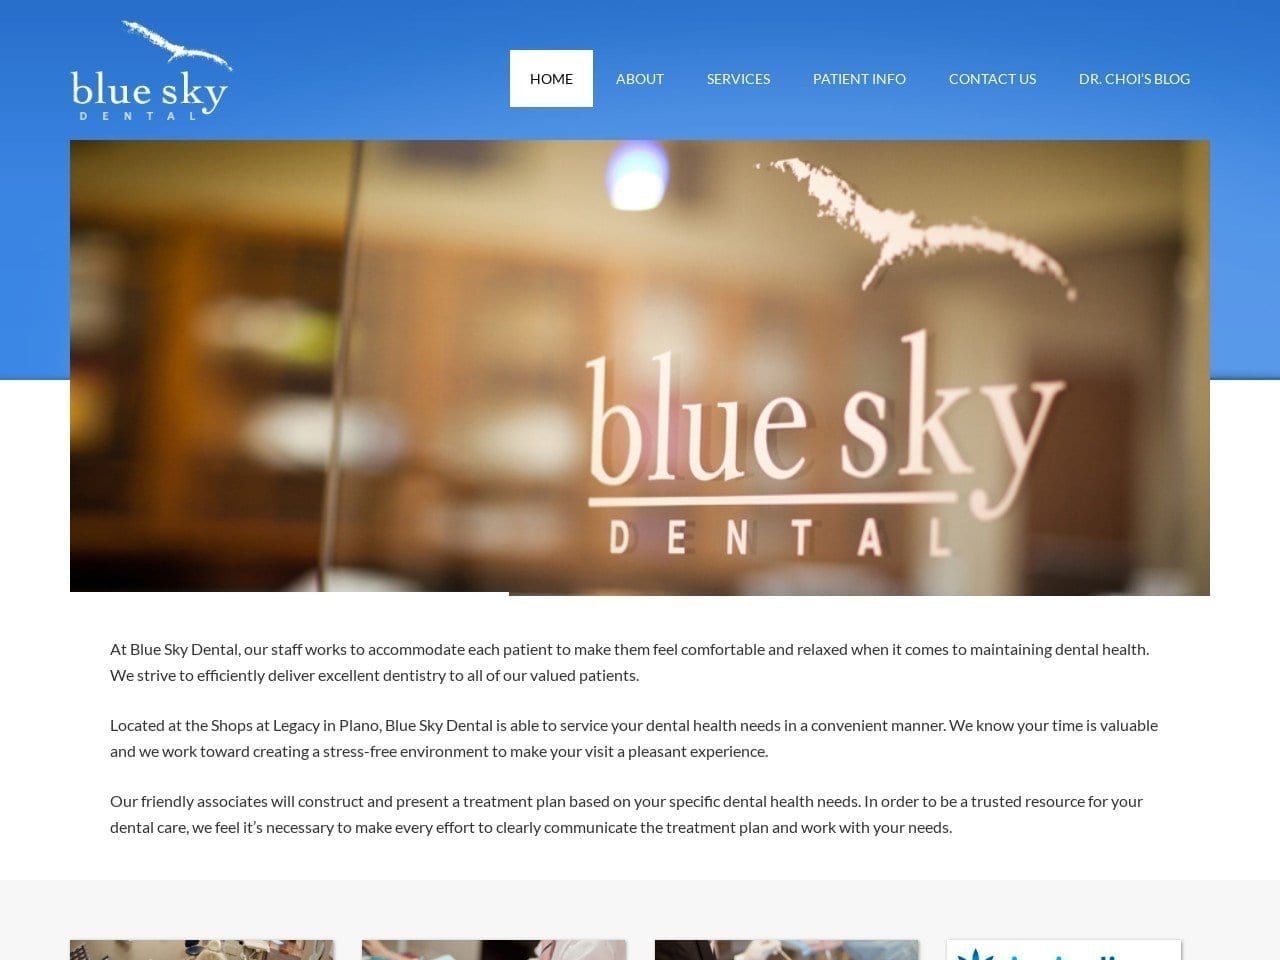 Blue Sky Dental Website Screenshot from blueskydental.com